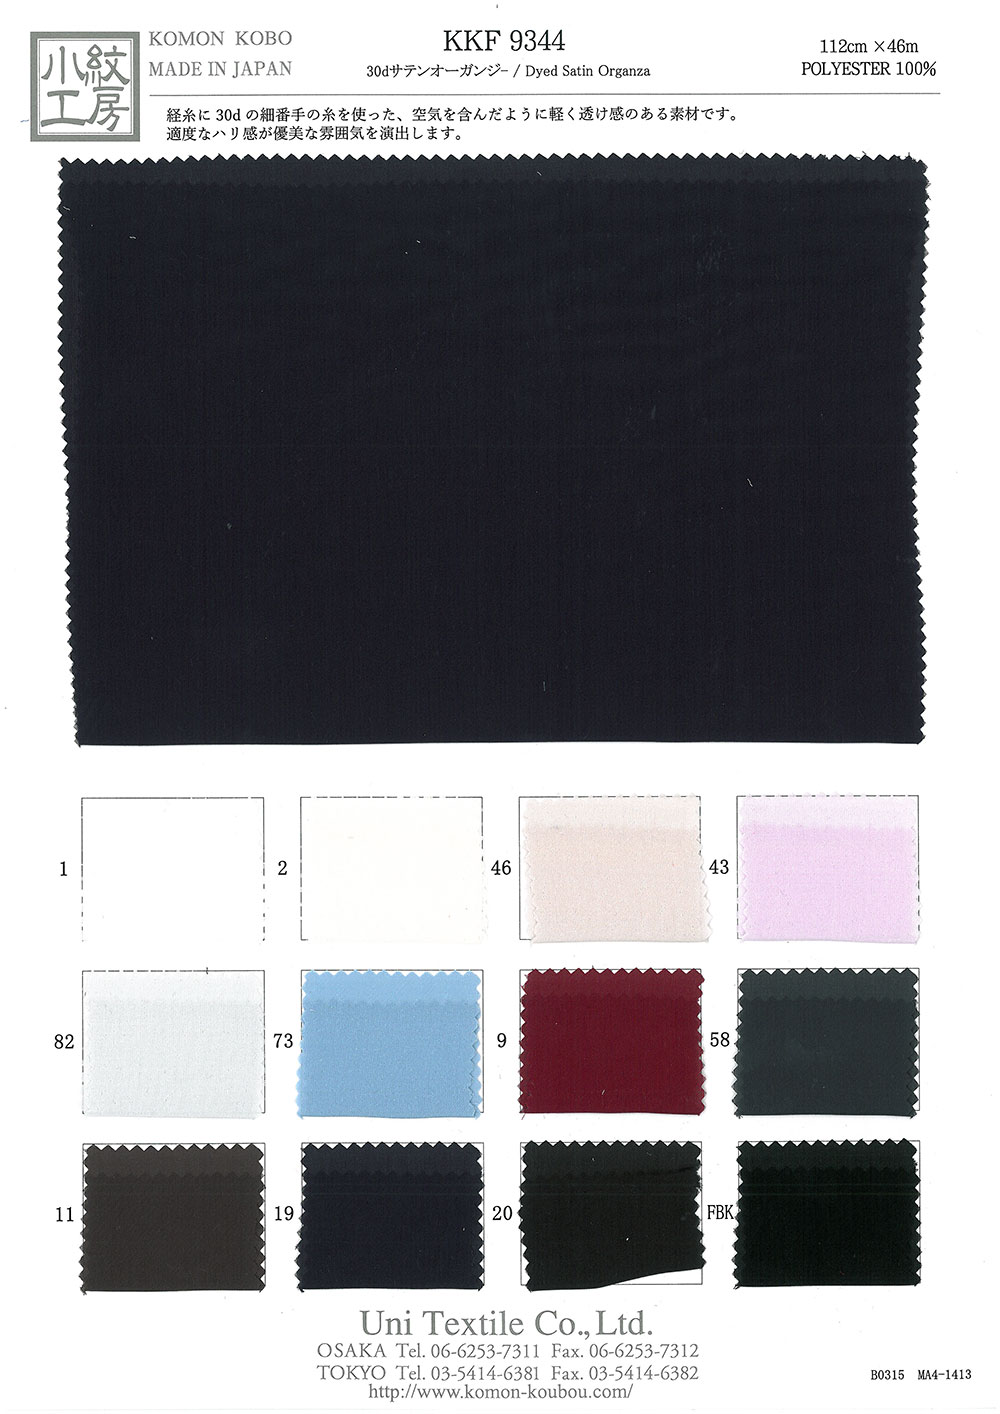 KKF9344 30d Satin Organdy[Textile / Fabric] Uni Textile